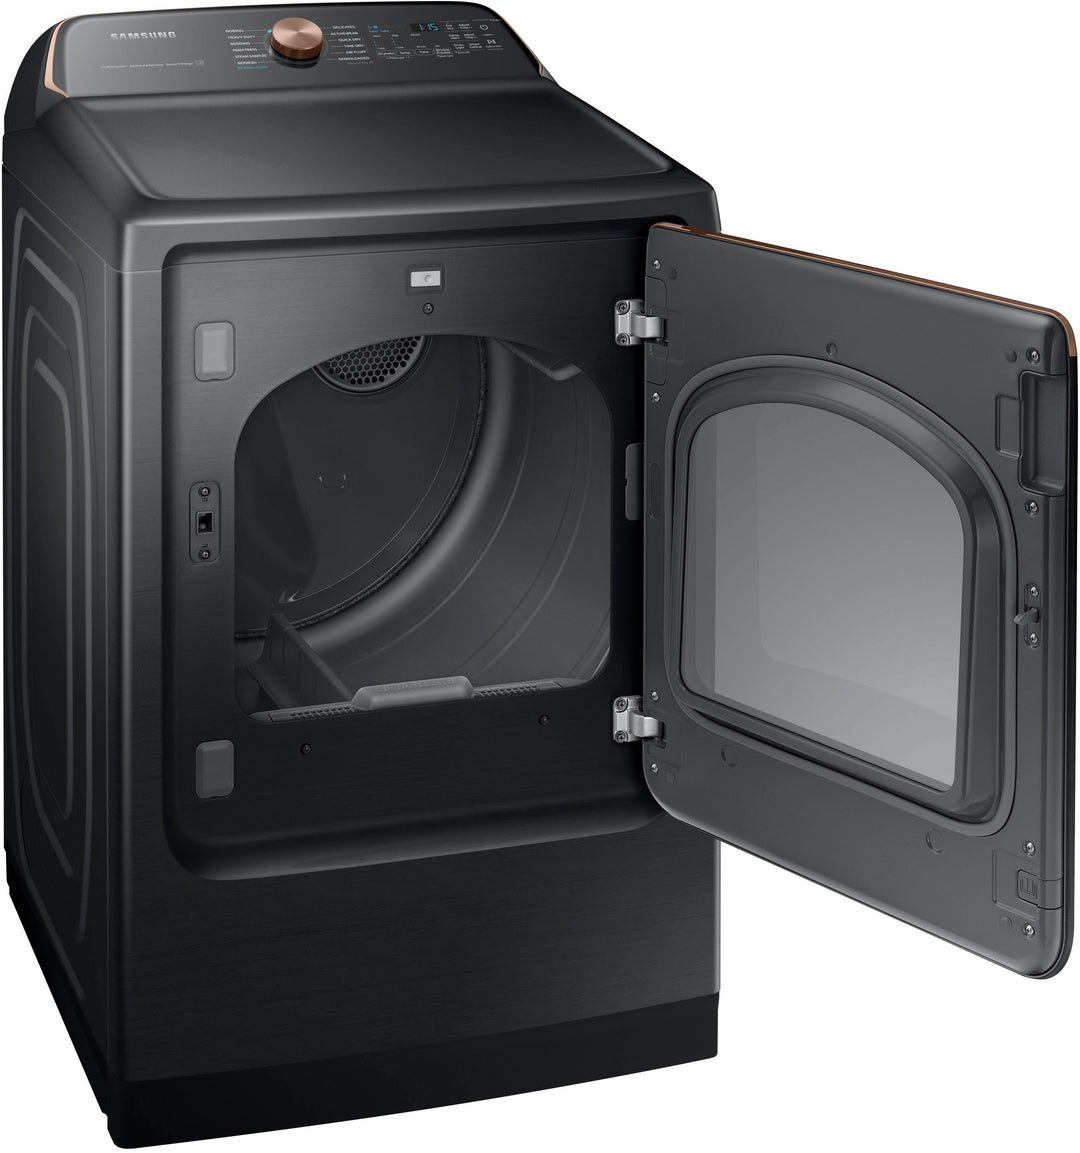 Samsung - 7.4 cu. ft. Smart Electric Dryer with Steam Sanitize+ - Brushed black_7